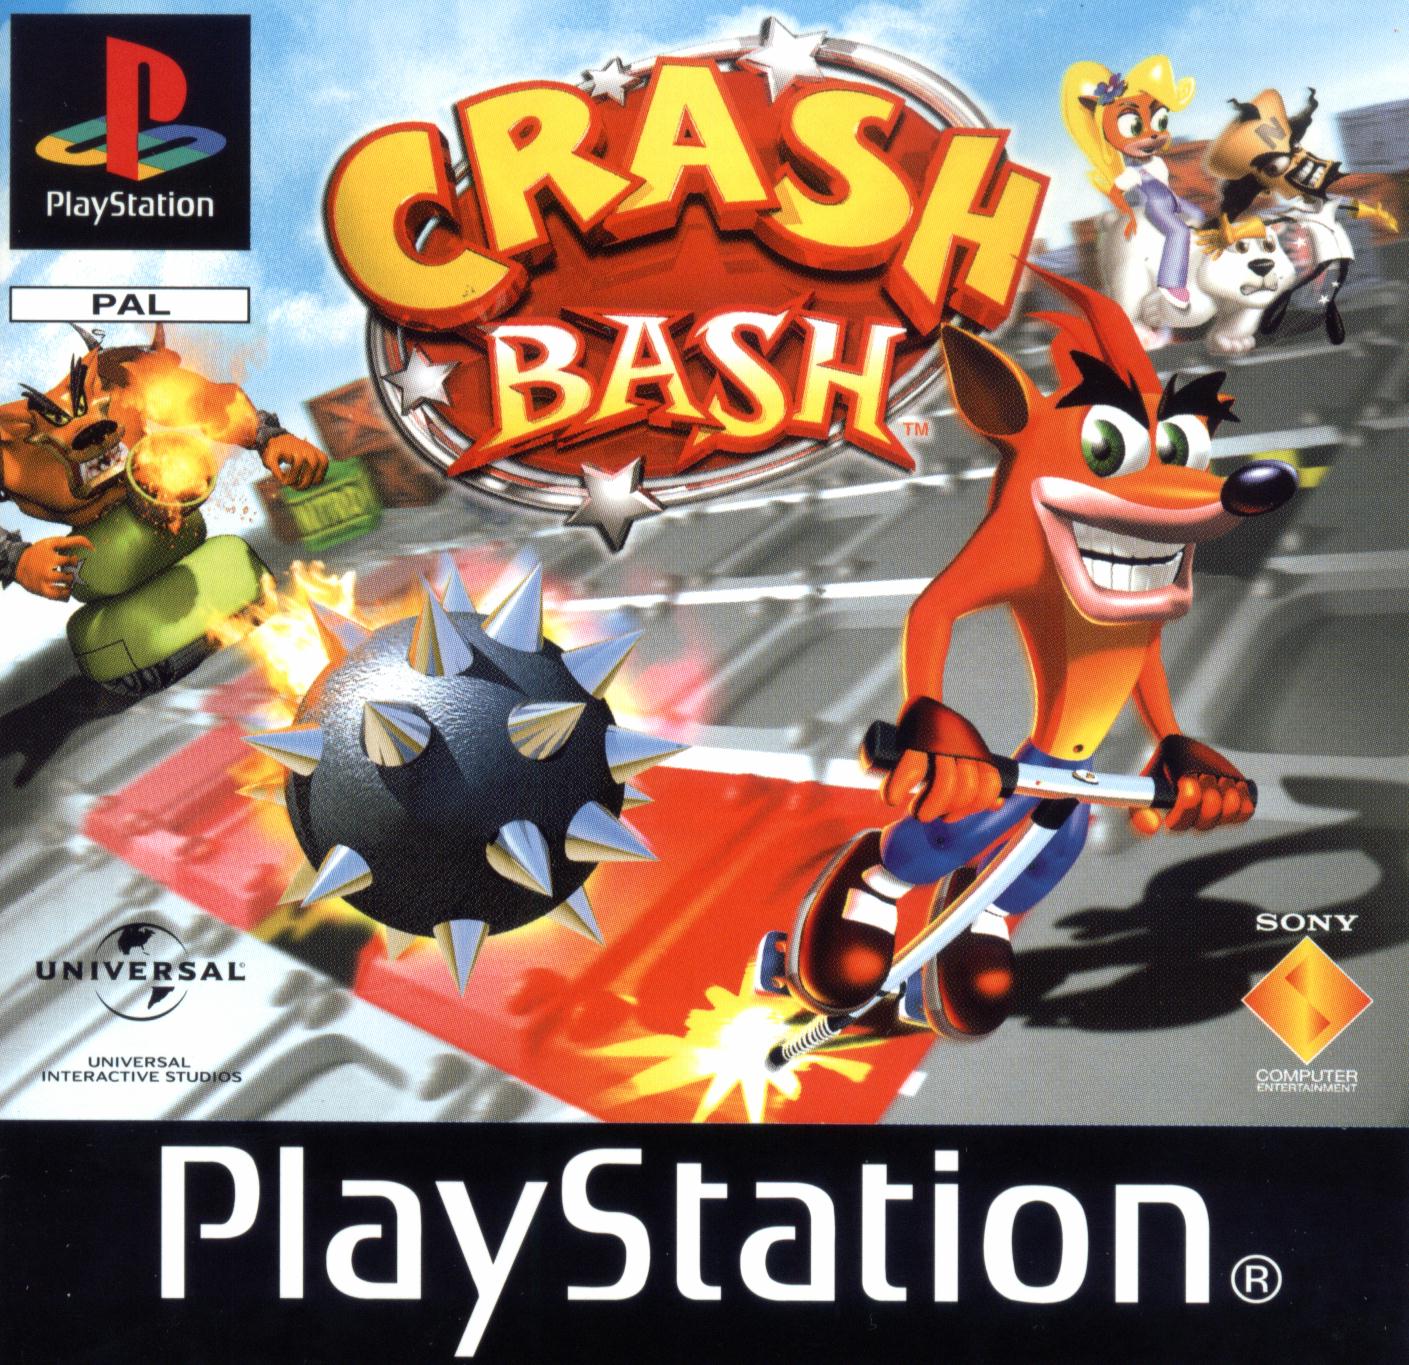 Download 1 Crash Game Play Station Free